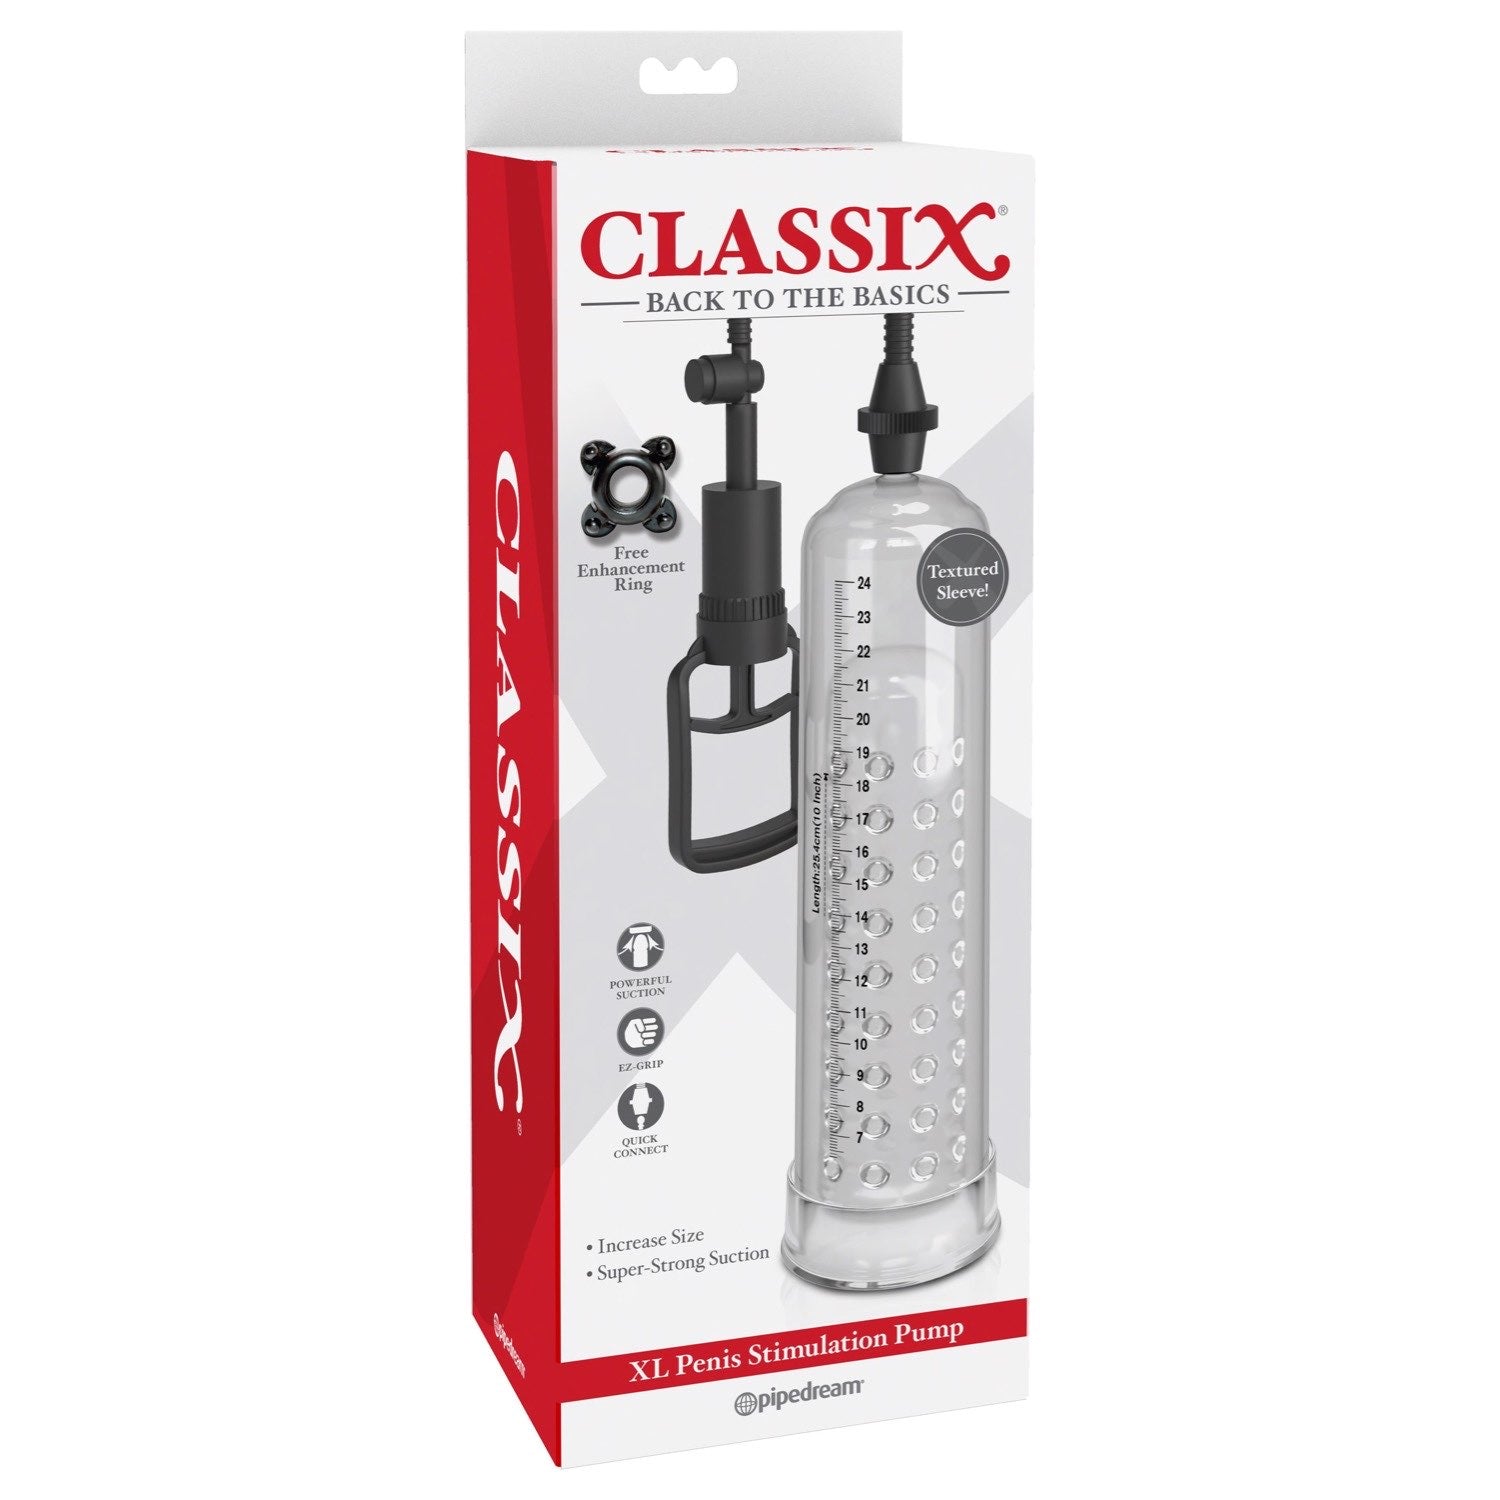 Classix XL Penis Stimulation Pump - Clear XL Penis Pump by Pipedream